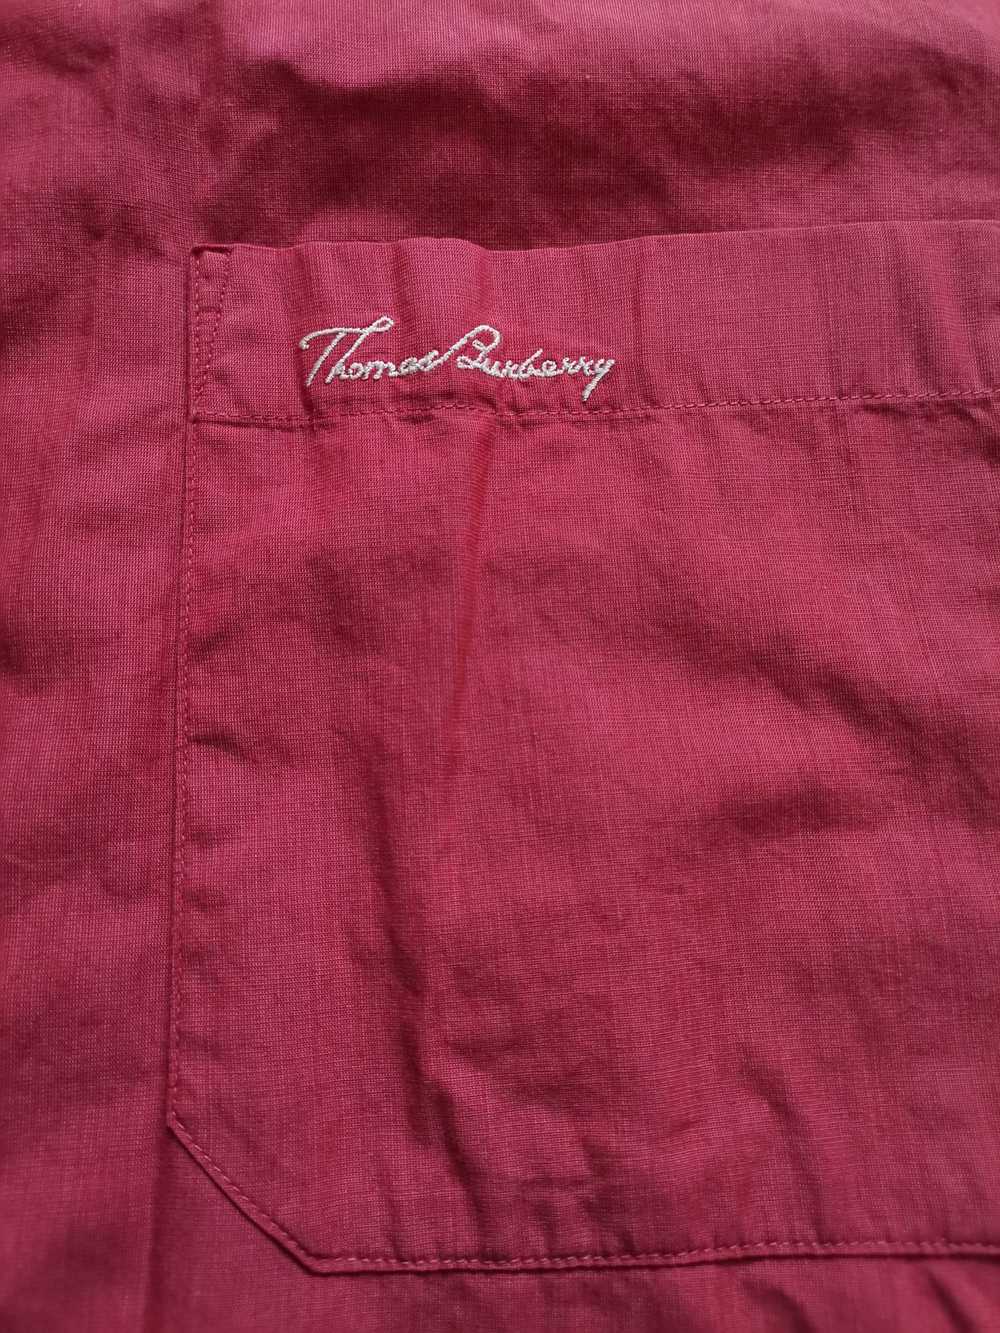 Burberry × Vintage Vintage Thomas Burberry Shirt - image 2